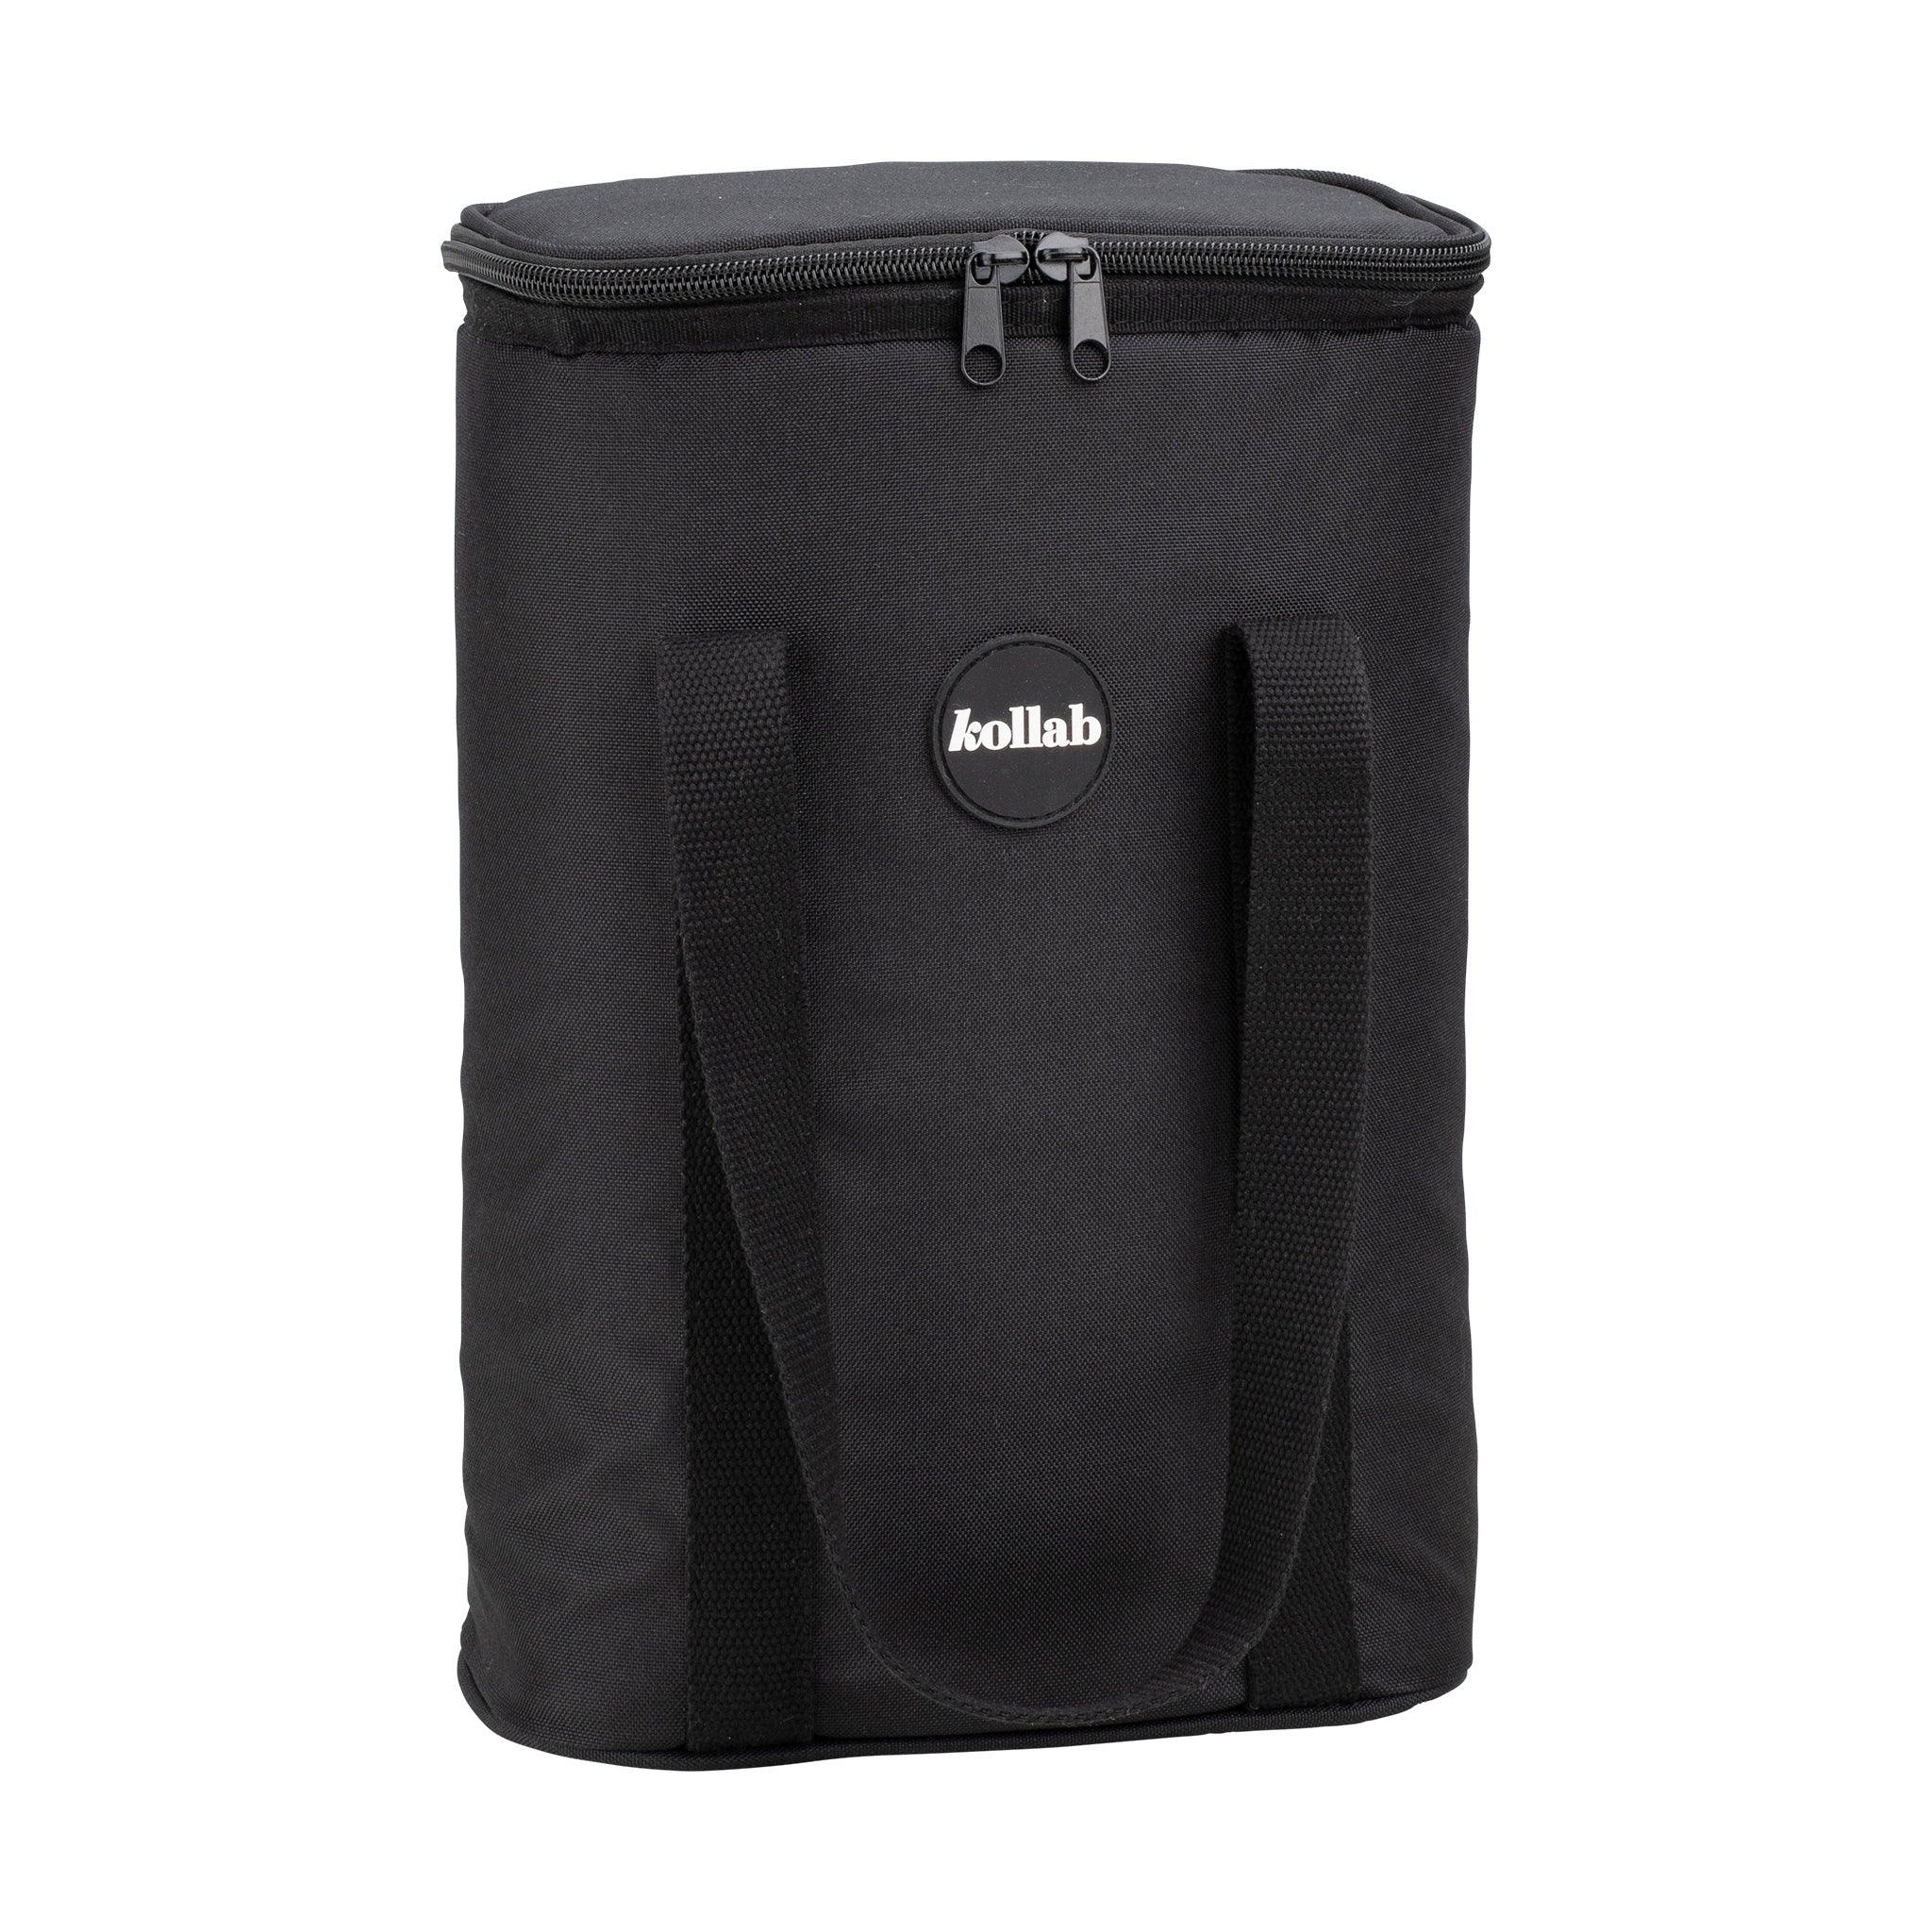 Kollab Holiday Wine Cooler Bag Black Black – Handbags from BJs Furniture Horsham